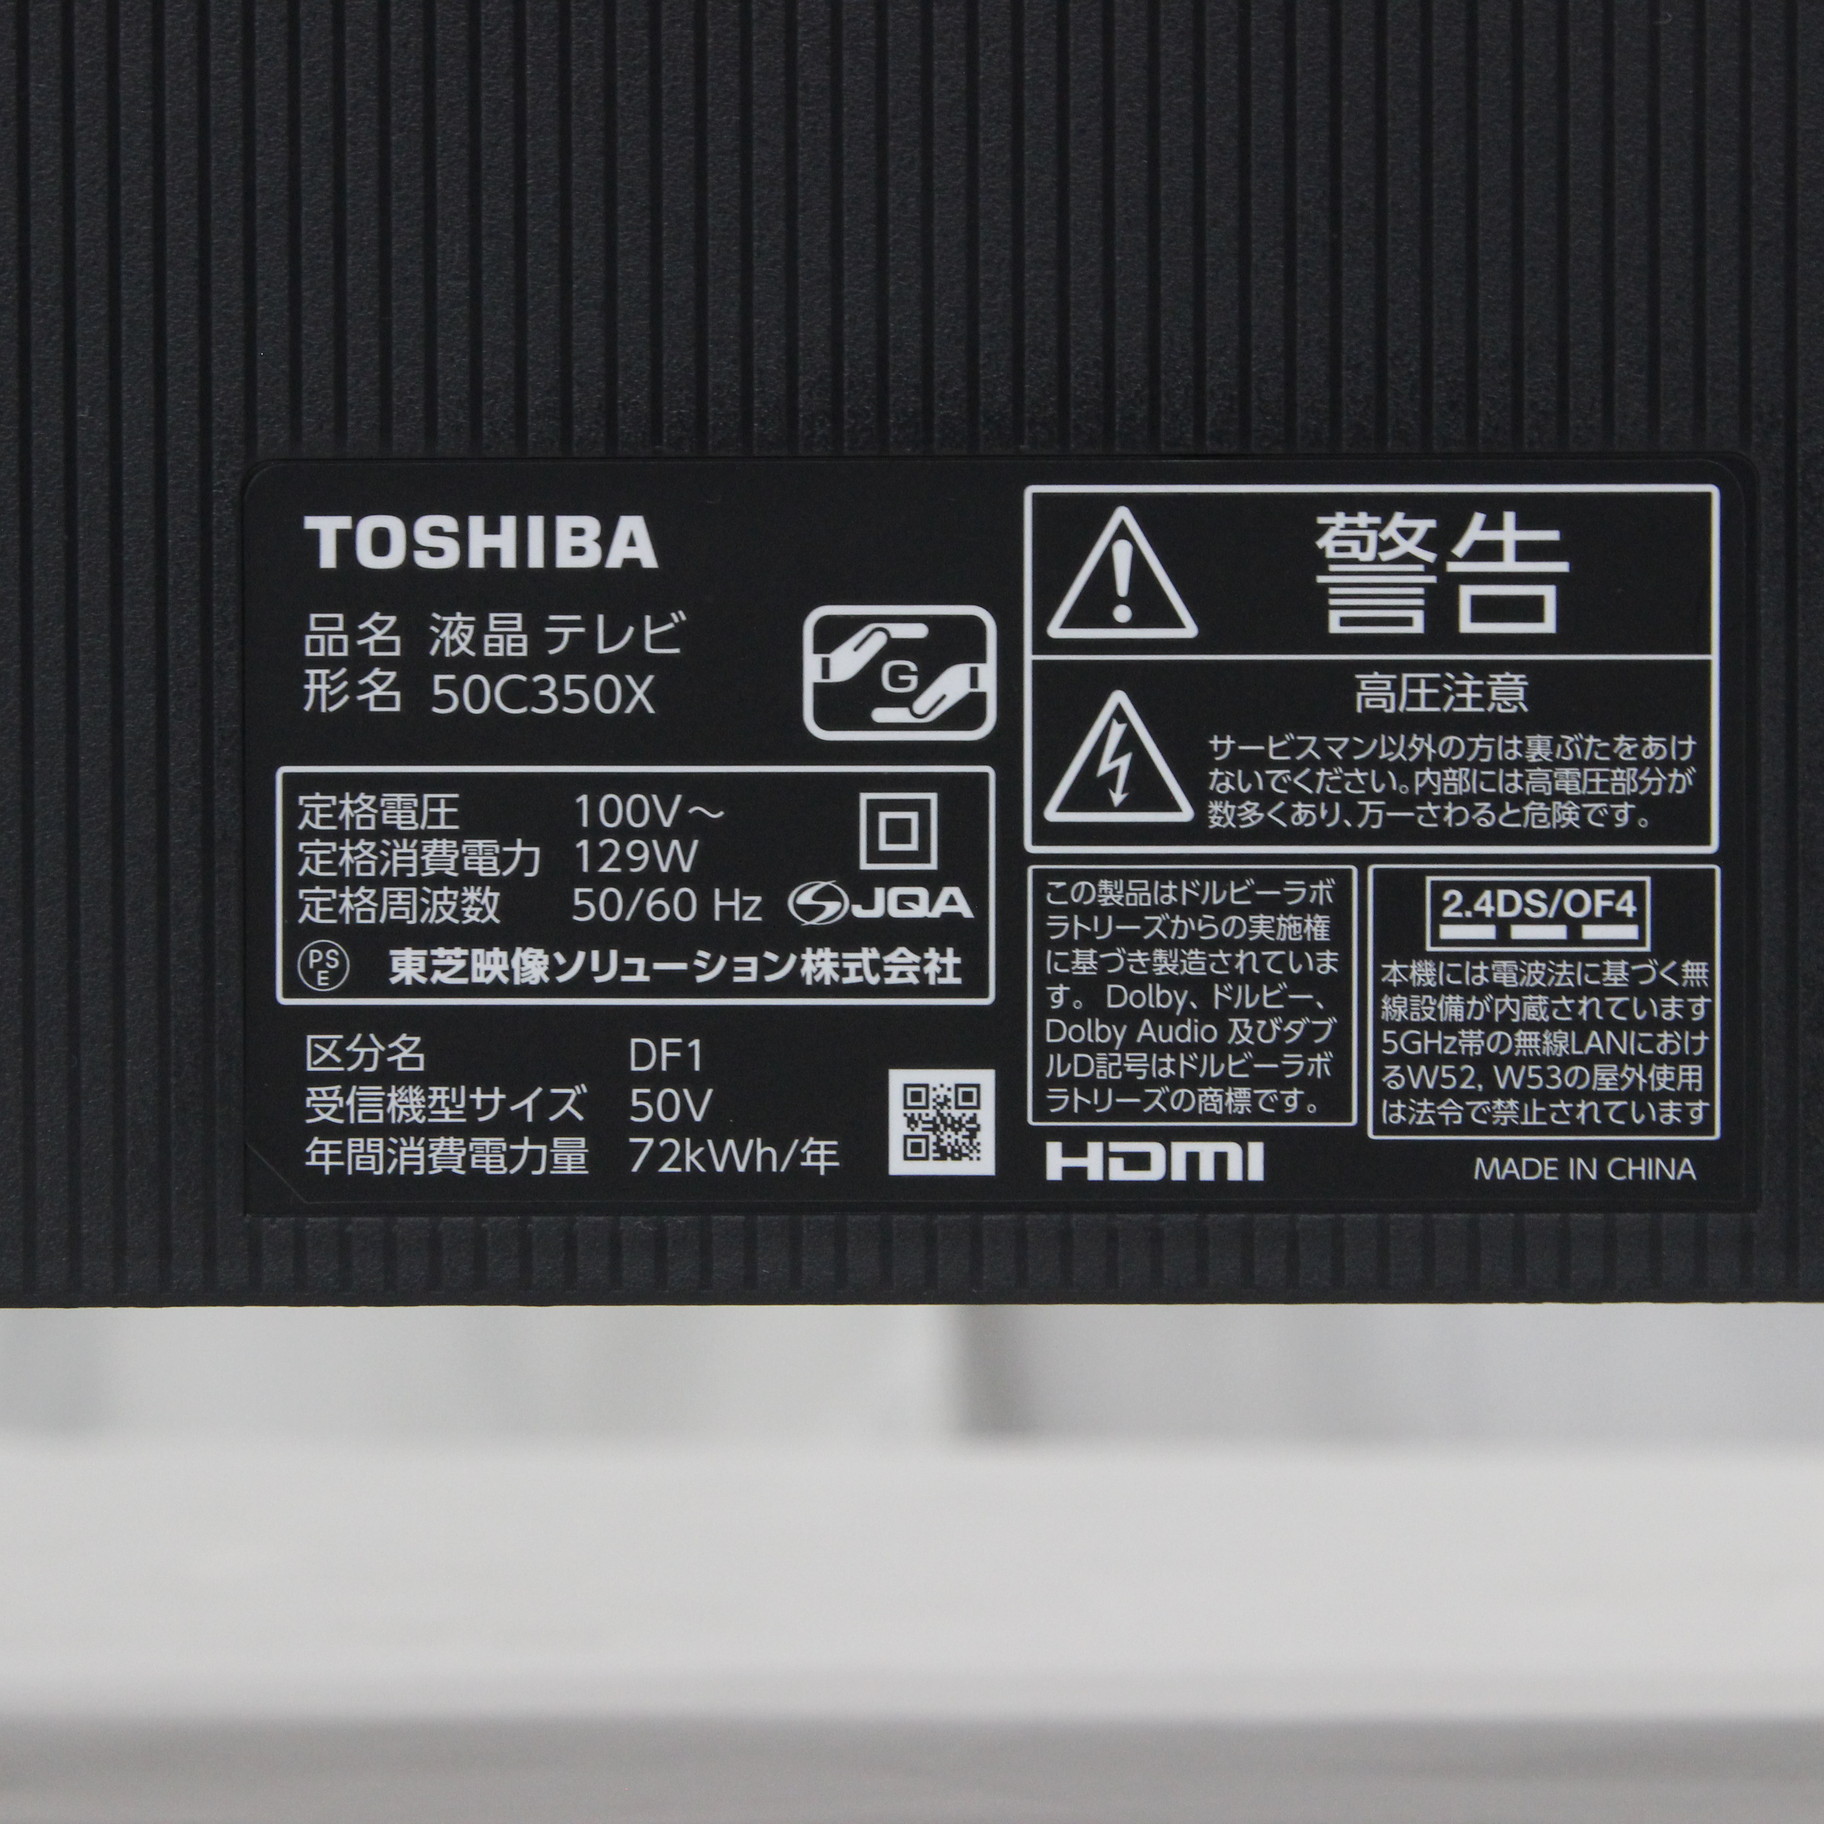 TOSHIBA 50C350X BLACK